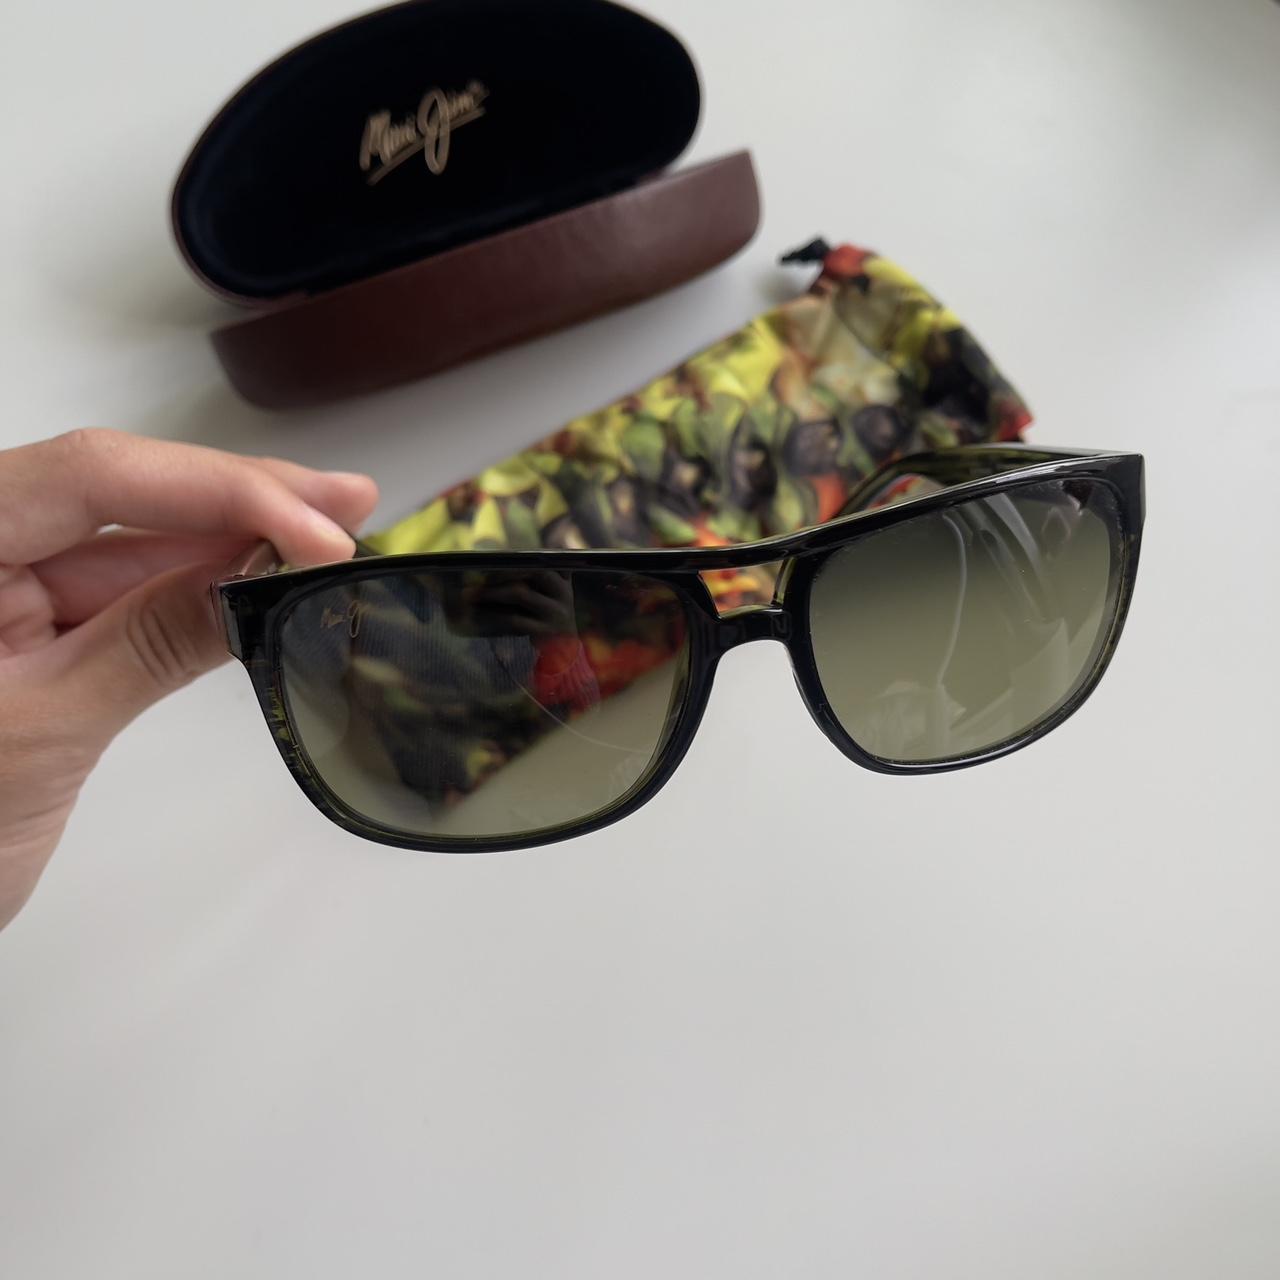 Maui Jim Women's Green and Black Sunglasses | Depop